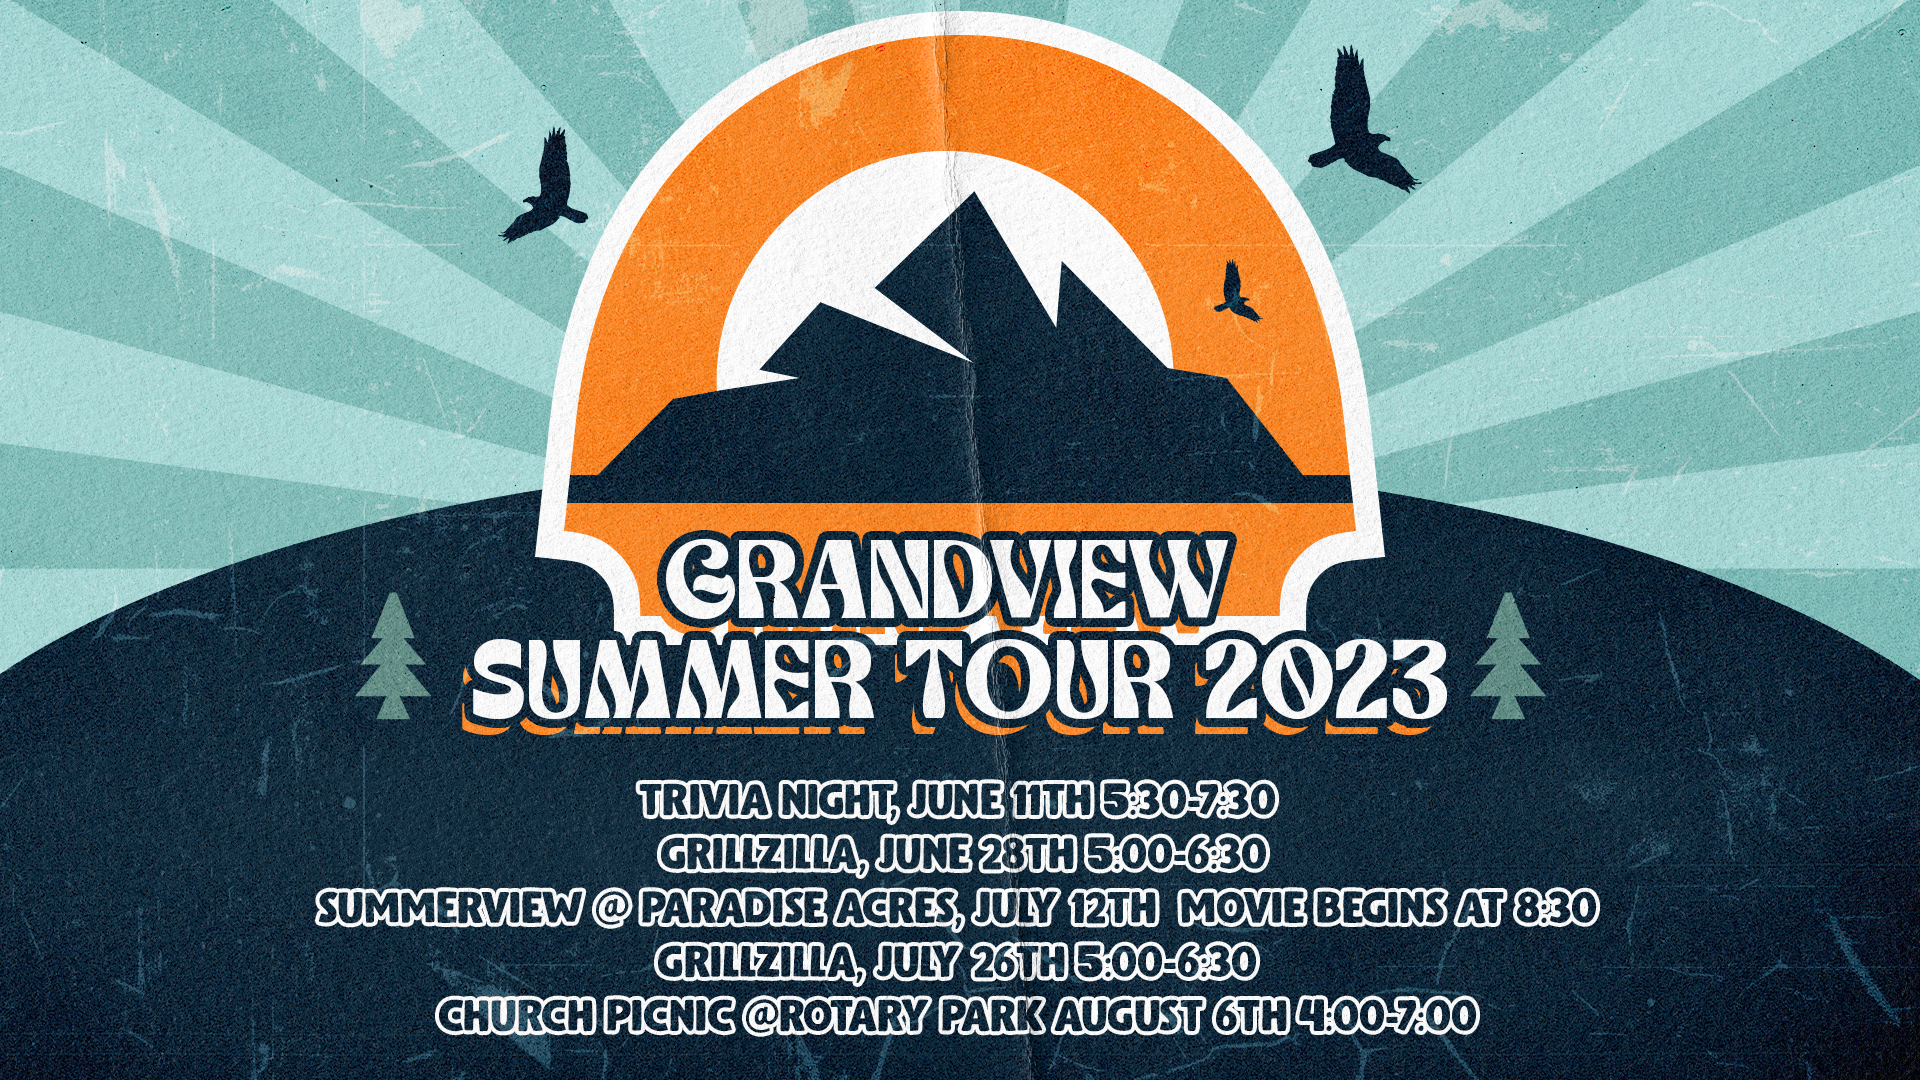 Grandview Summer Tour 2023 - HD Title Slide (1920x1080)